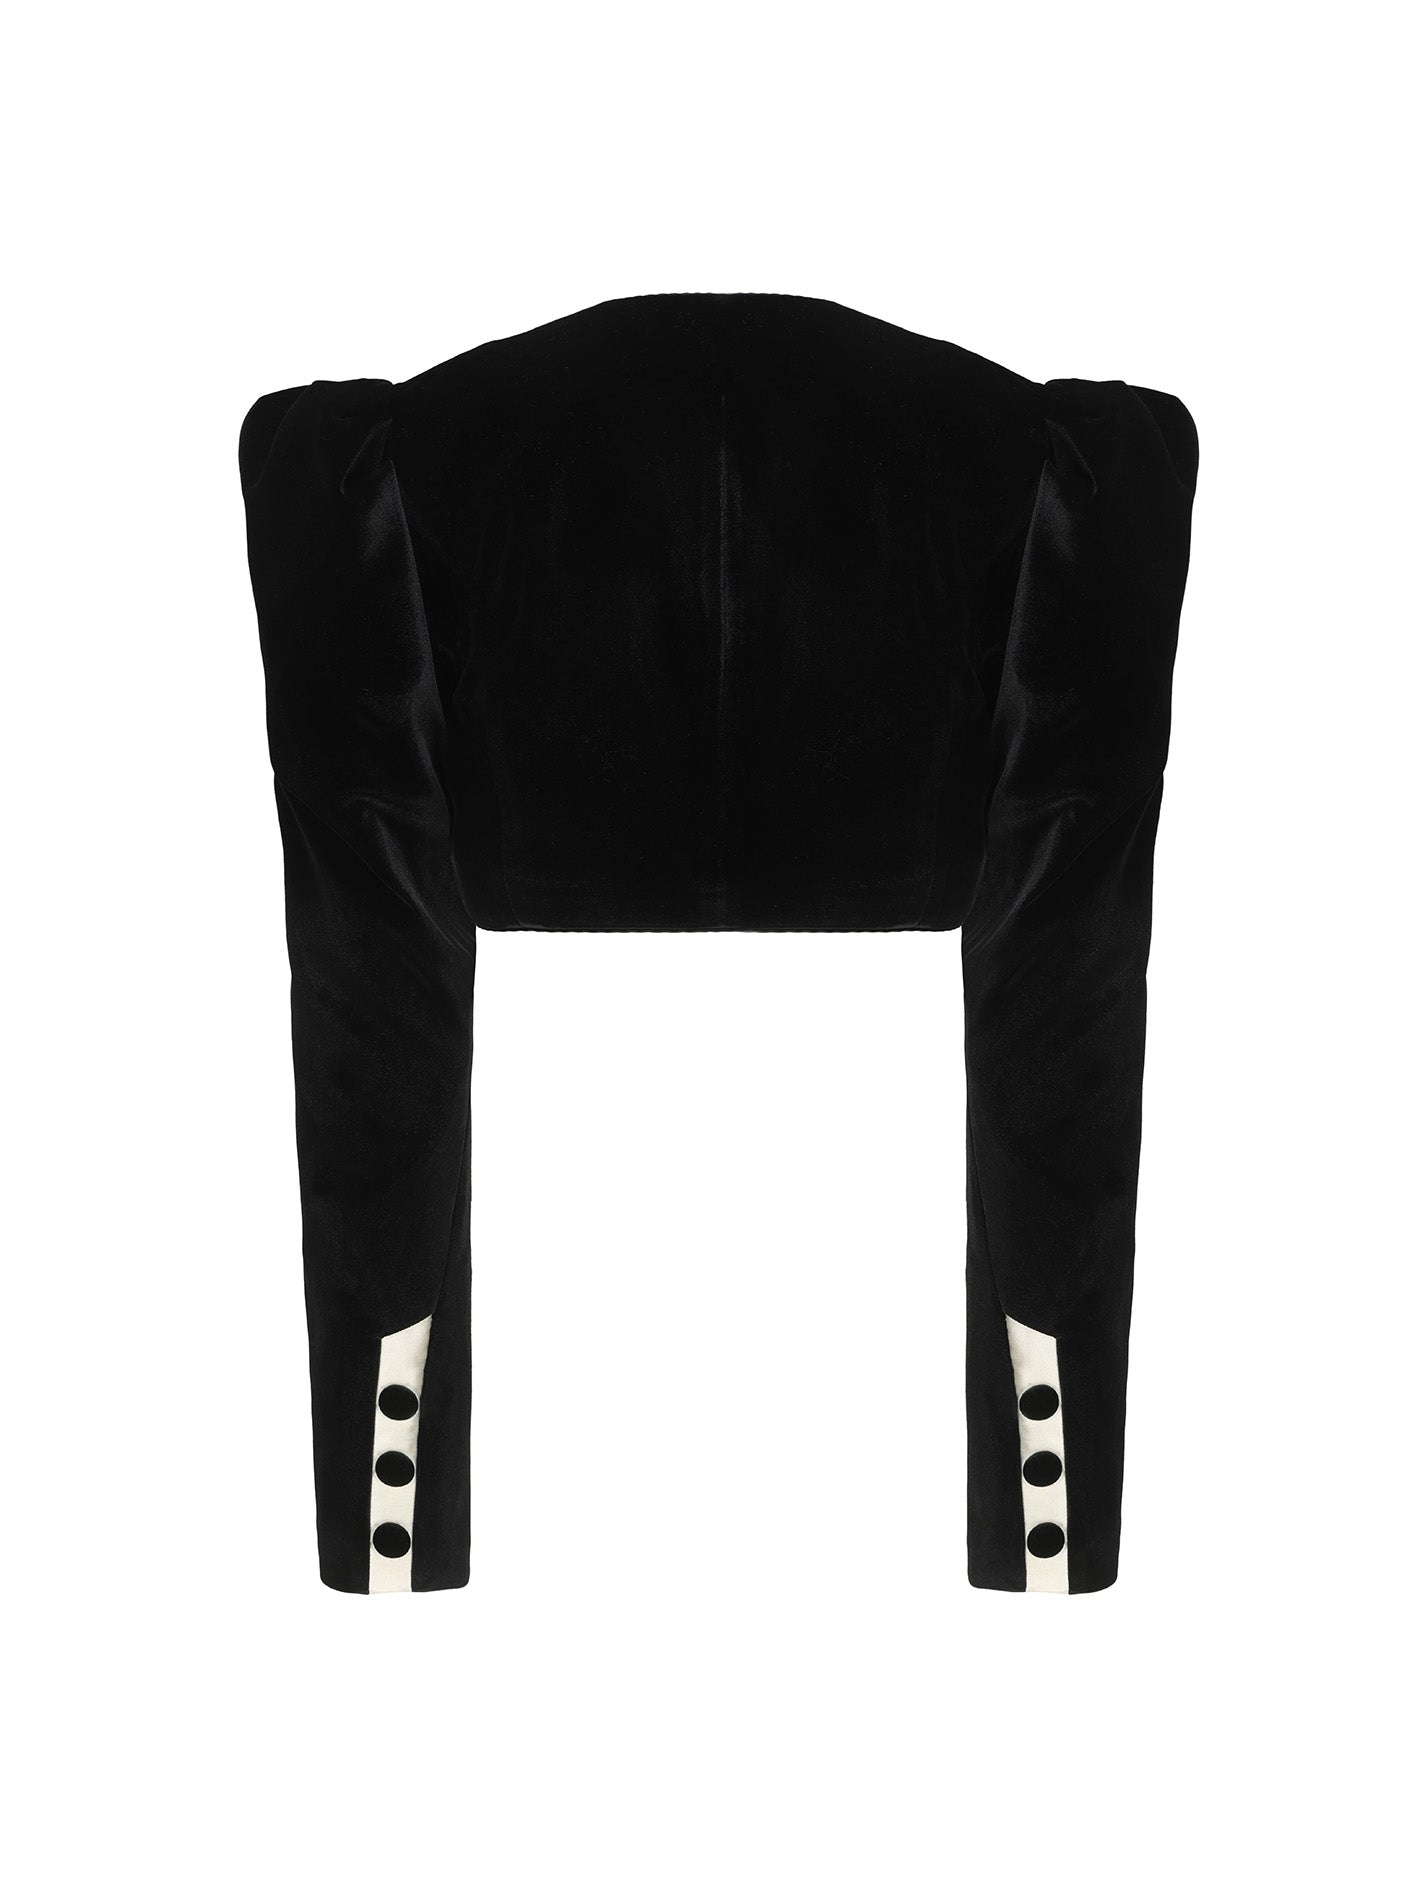 Wilma Velvet Jacket (Black)